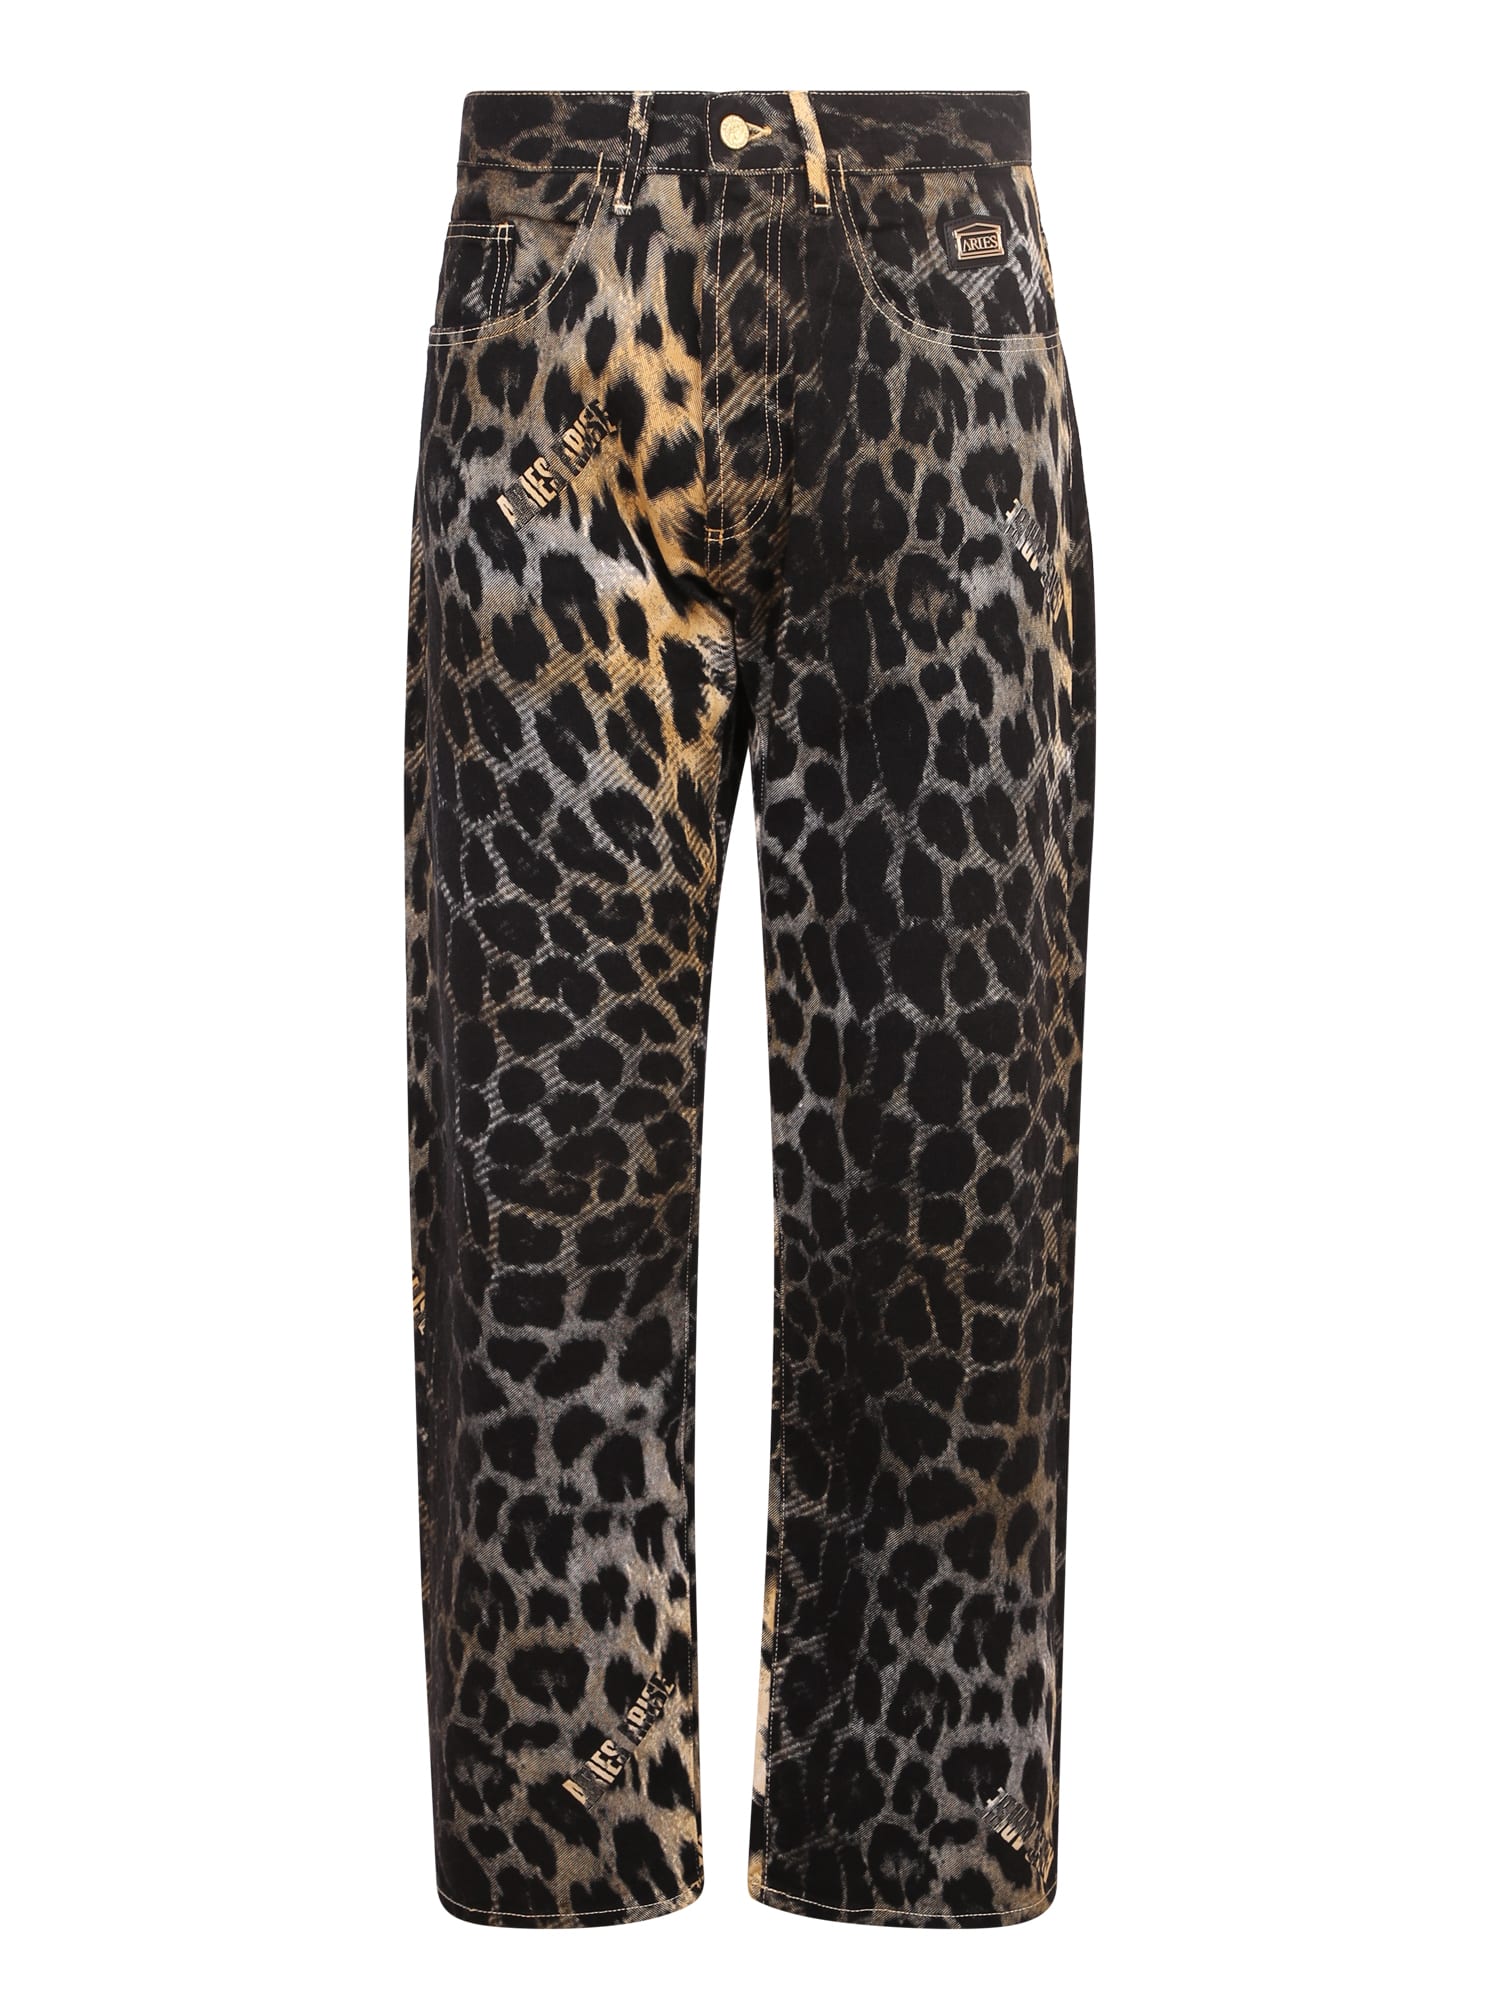 Aries Leopard Jeans